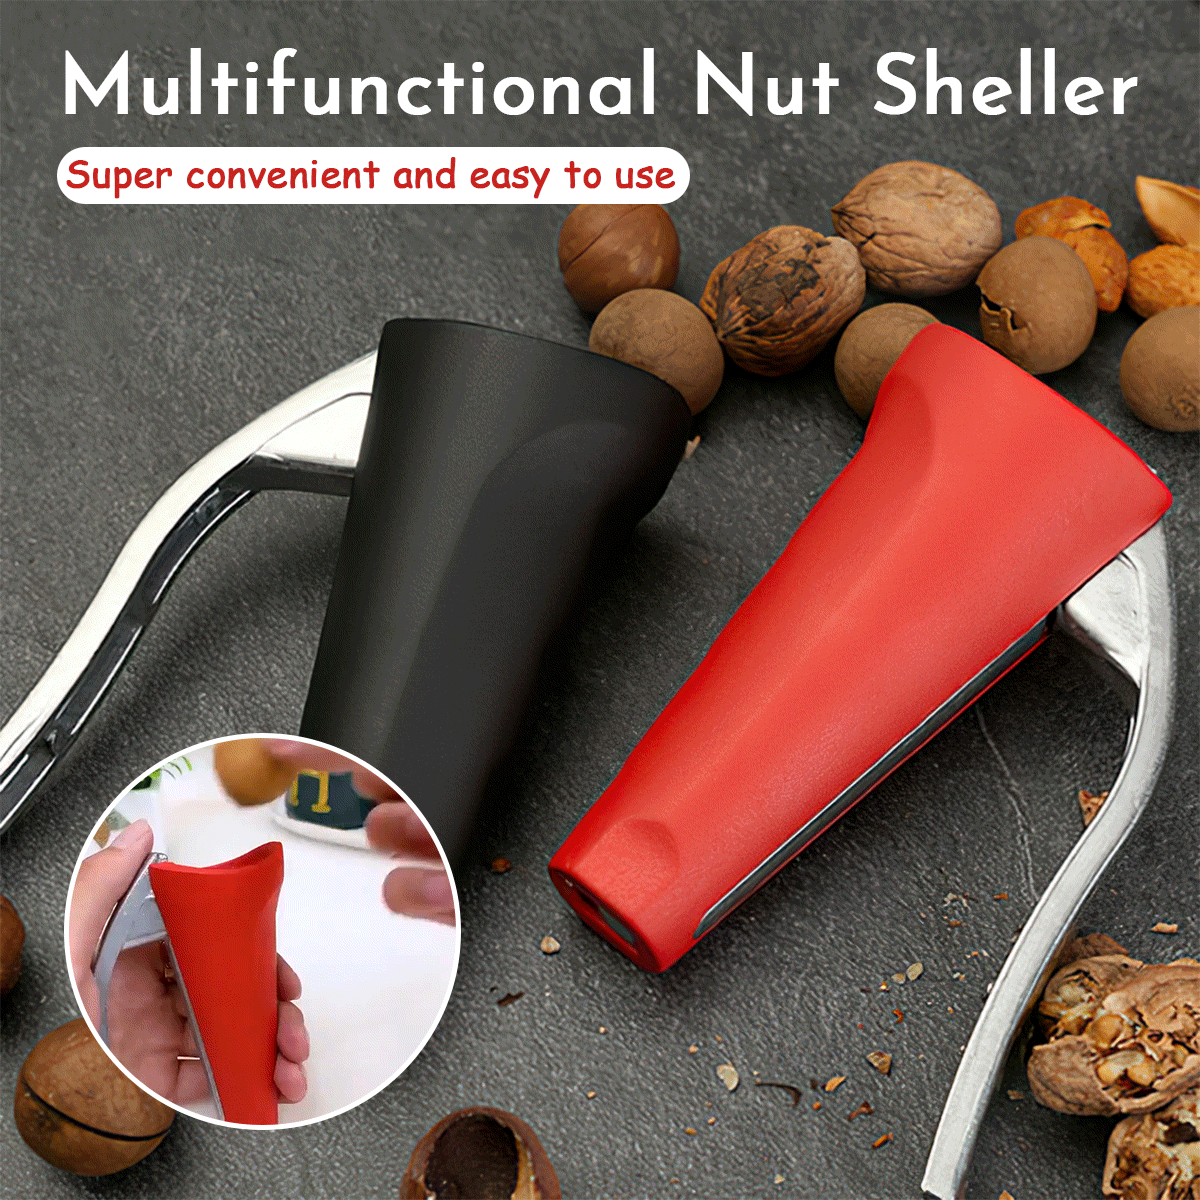 Multifunctional Nut Sheller